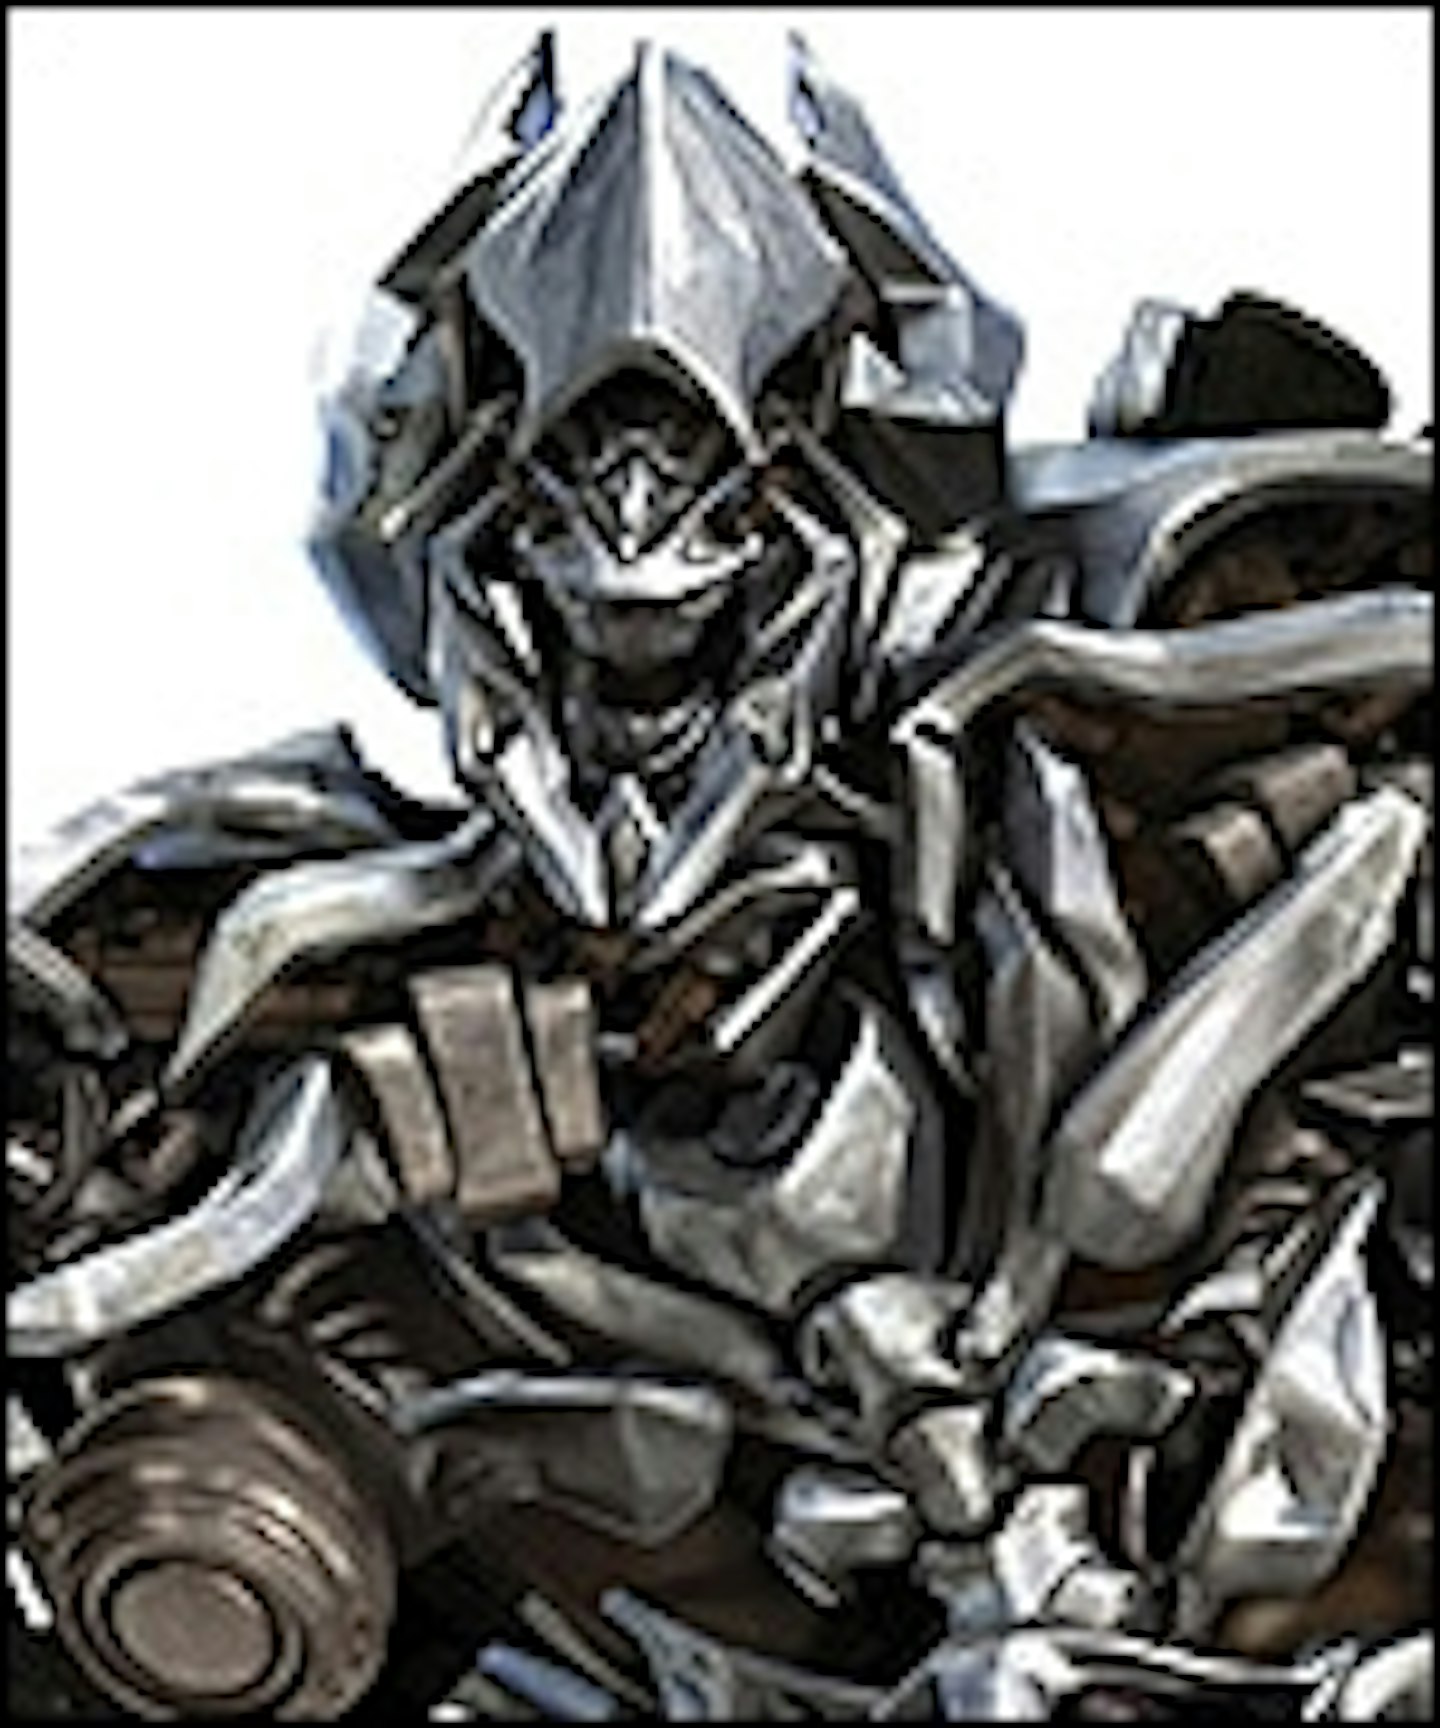 Hugo Weaving Voicing Megatron in Transformers!